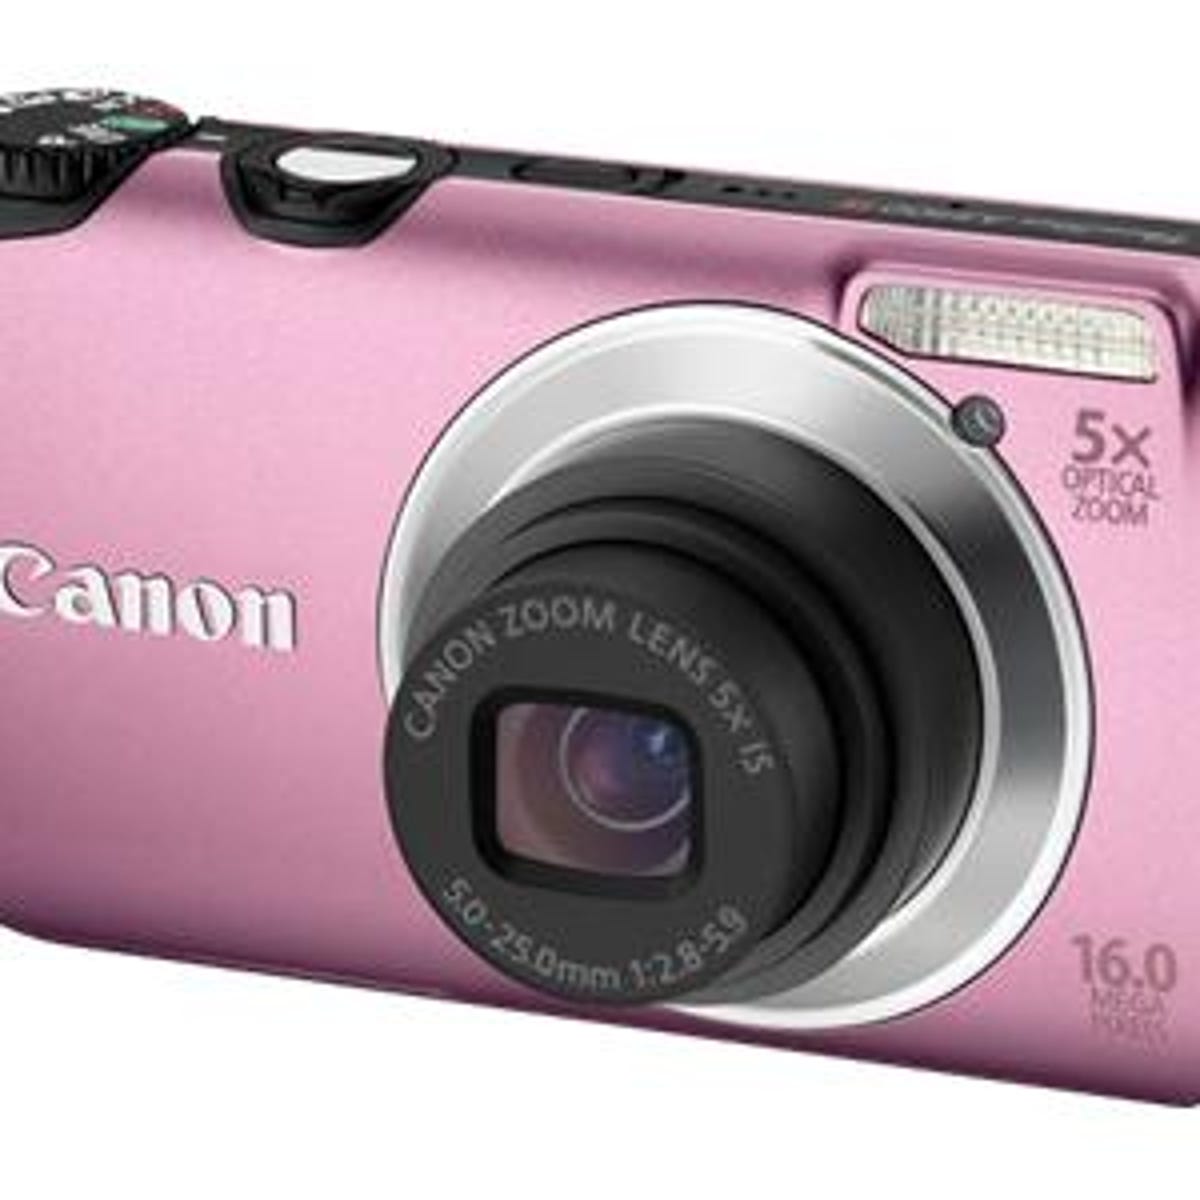 Canon PowerShot A review: Canon PowerShot A - CNET